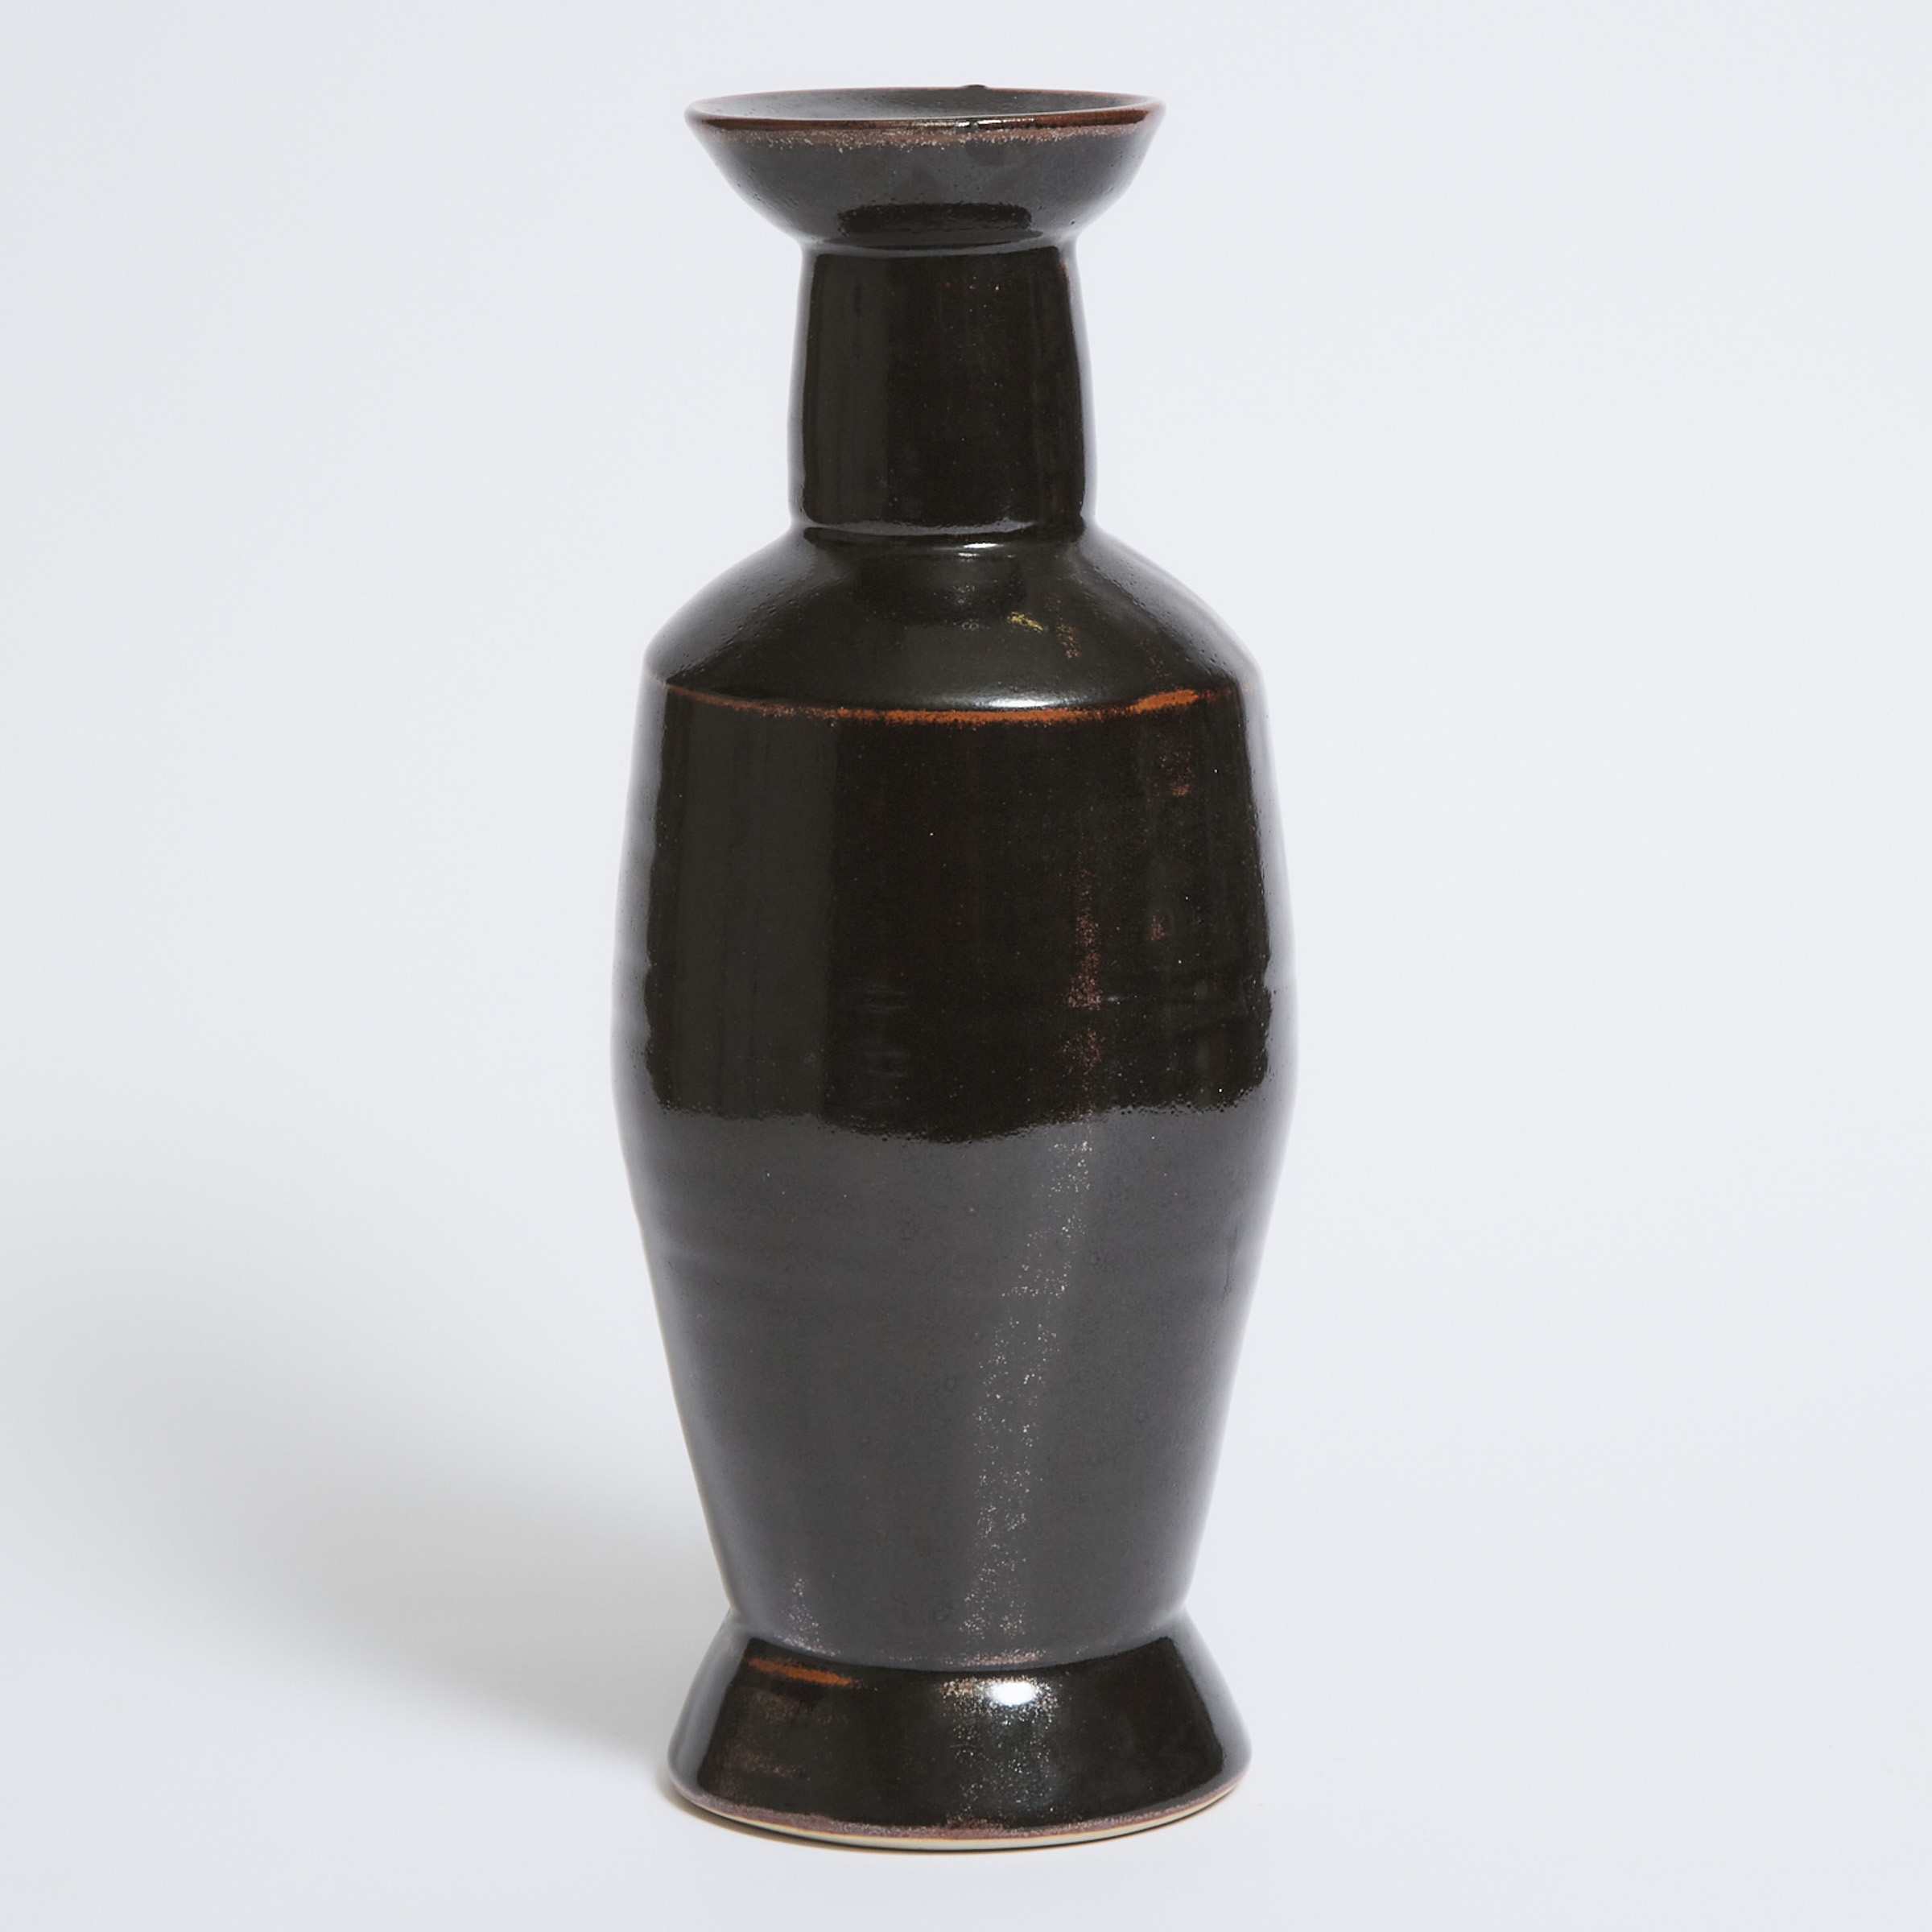 Bruce Cochrane (Canadian, b.1953), Tea Dust Glazed Stoneware Vase, early 21st century